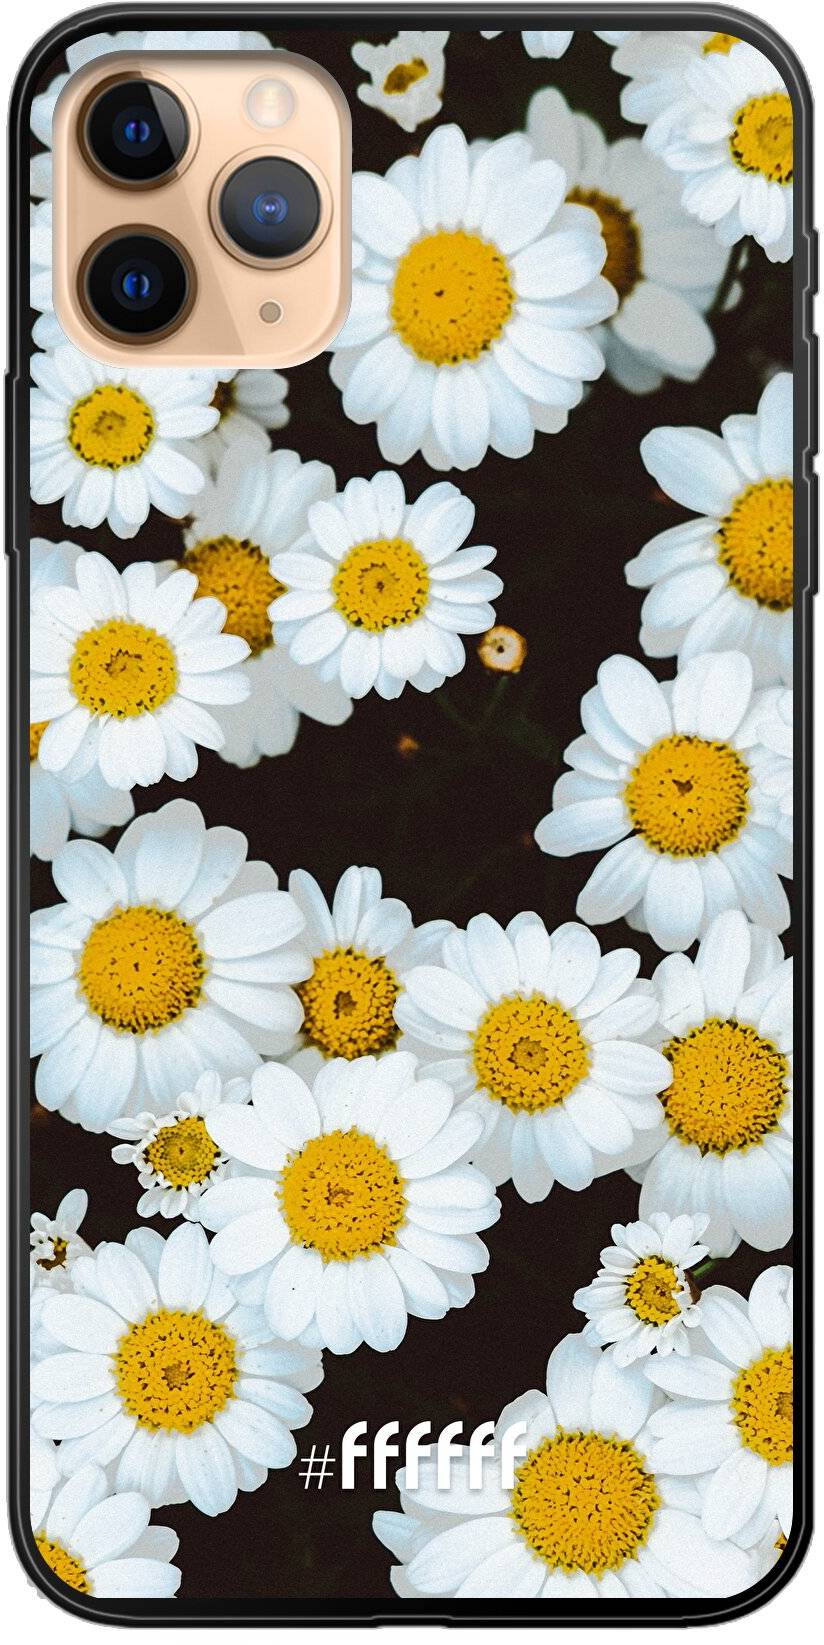 Daisies iPhone 11 Pro Max